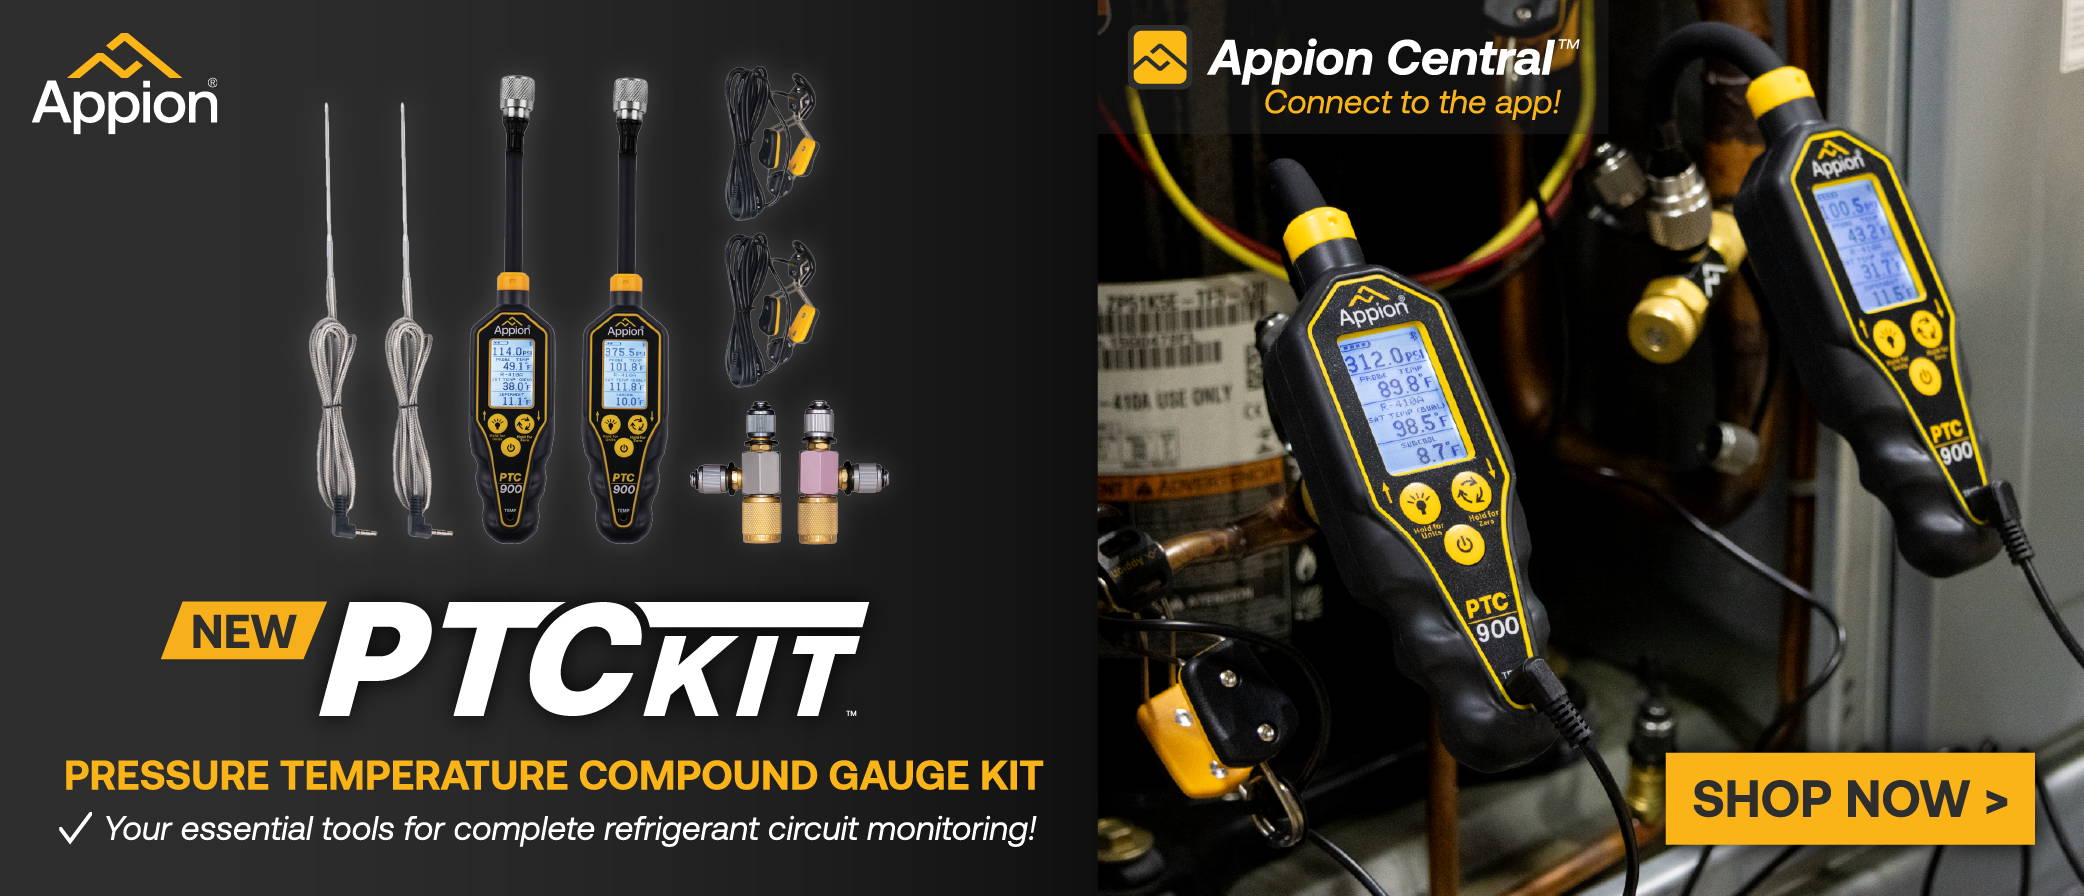 The NEW Appion PTCKIT Pressure Temperature Compound Gauge Kit